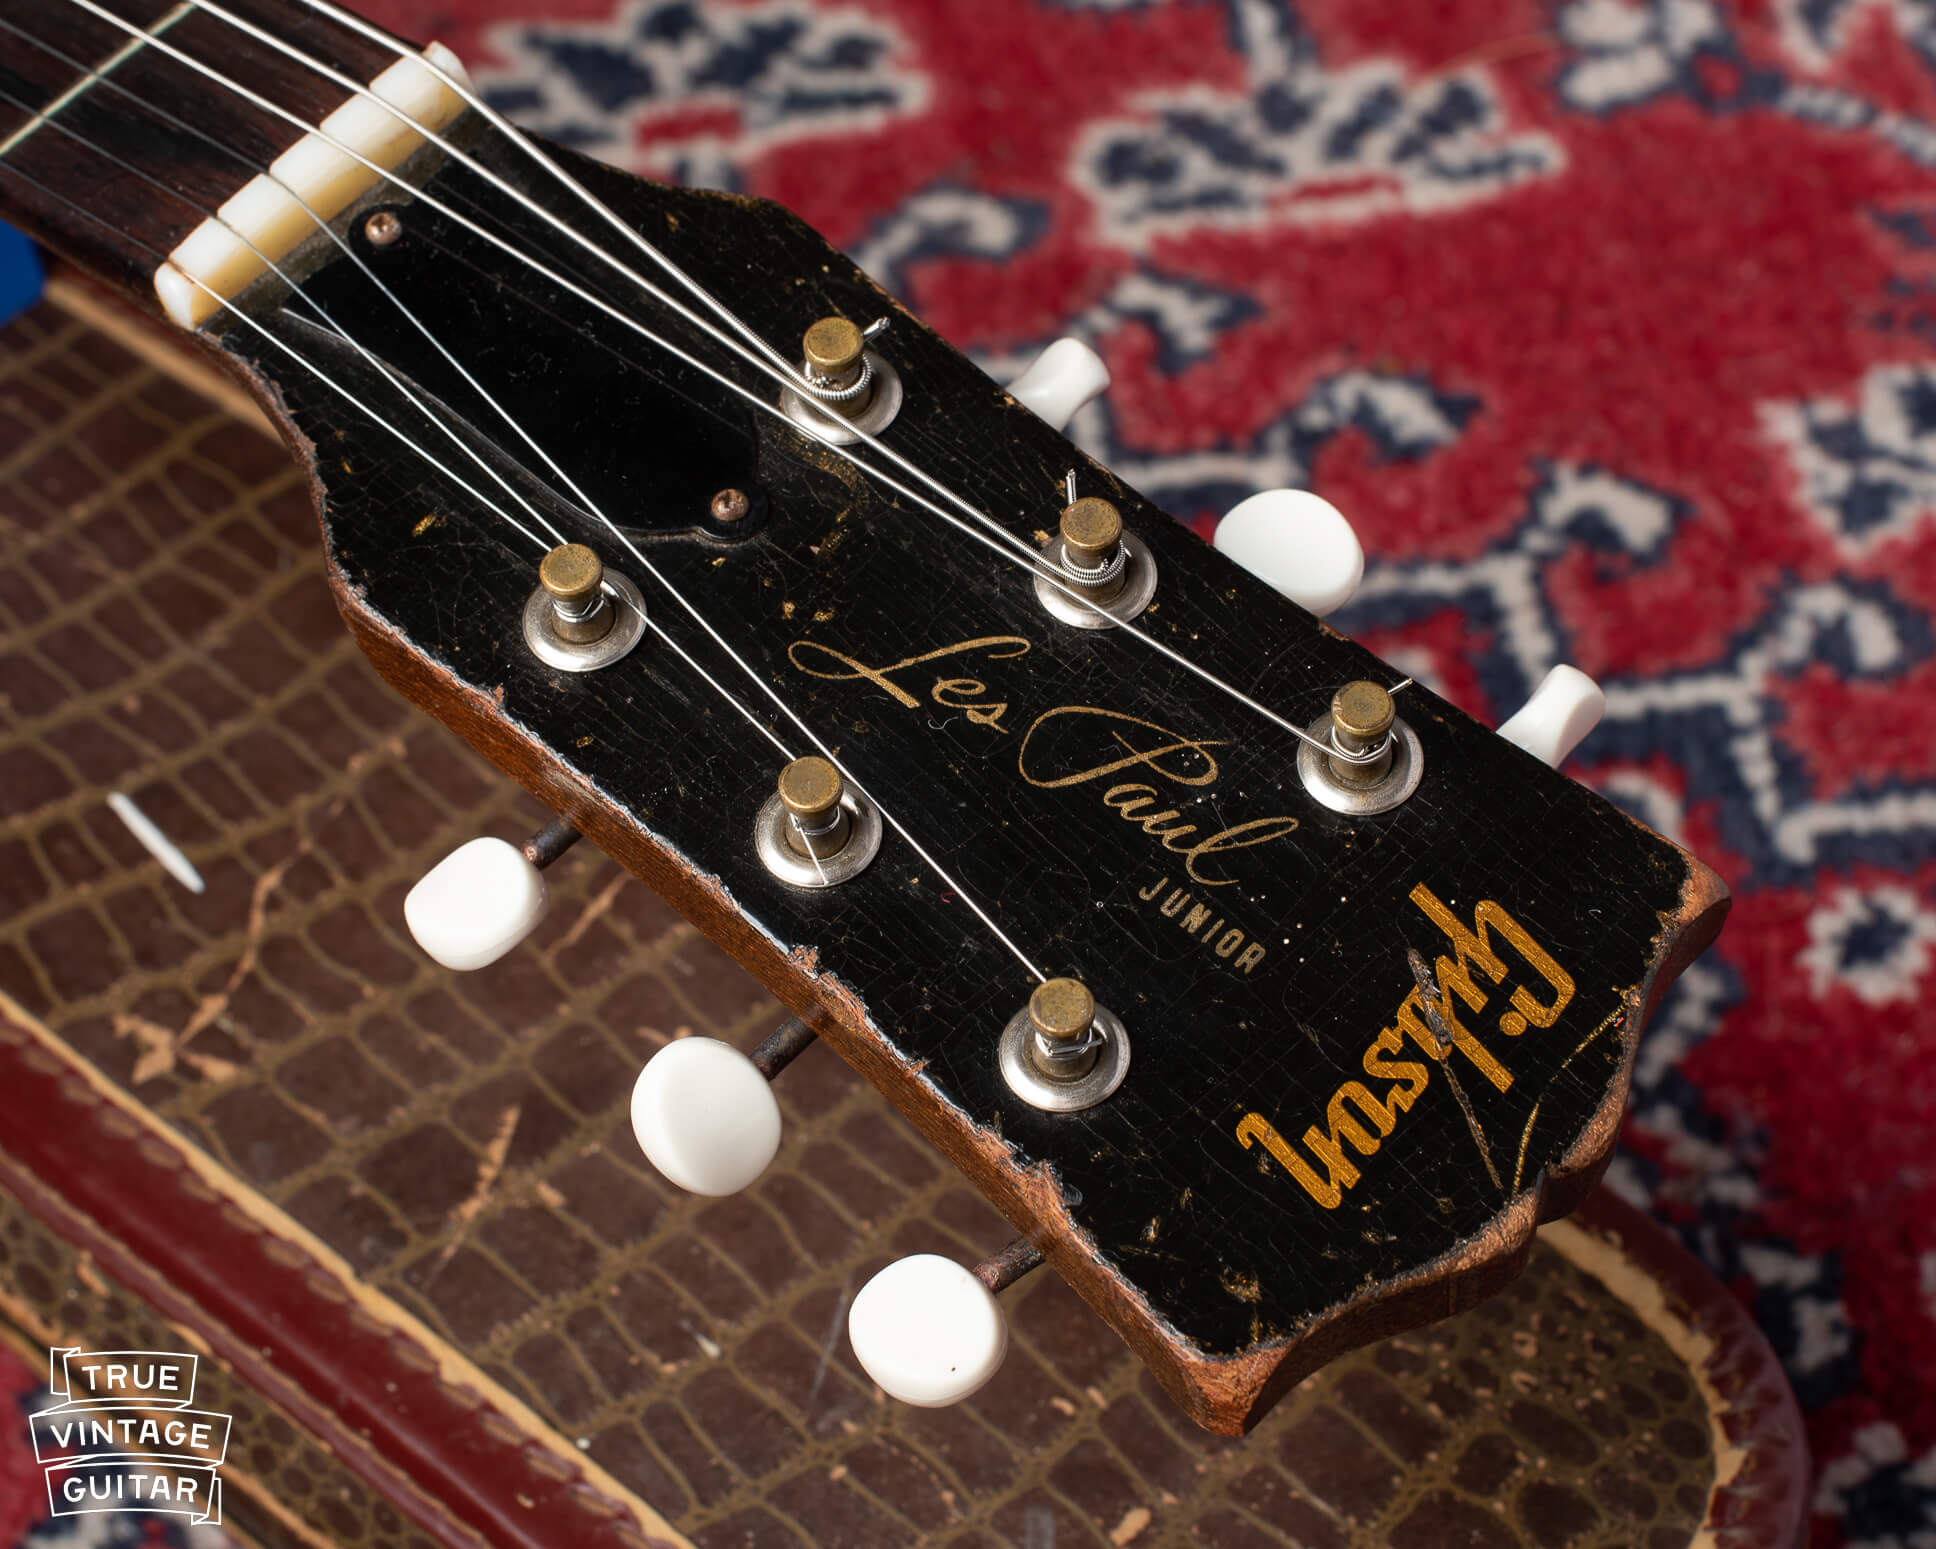 Les Paul silkscreen on the headstock of a 1955 Gibson Les Paul Junior